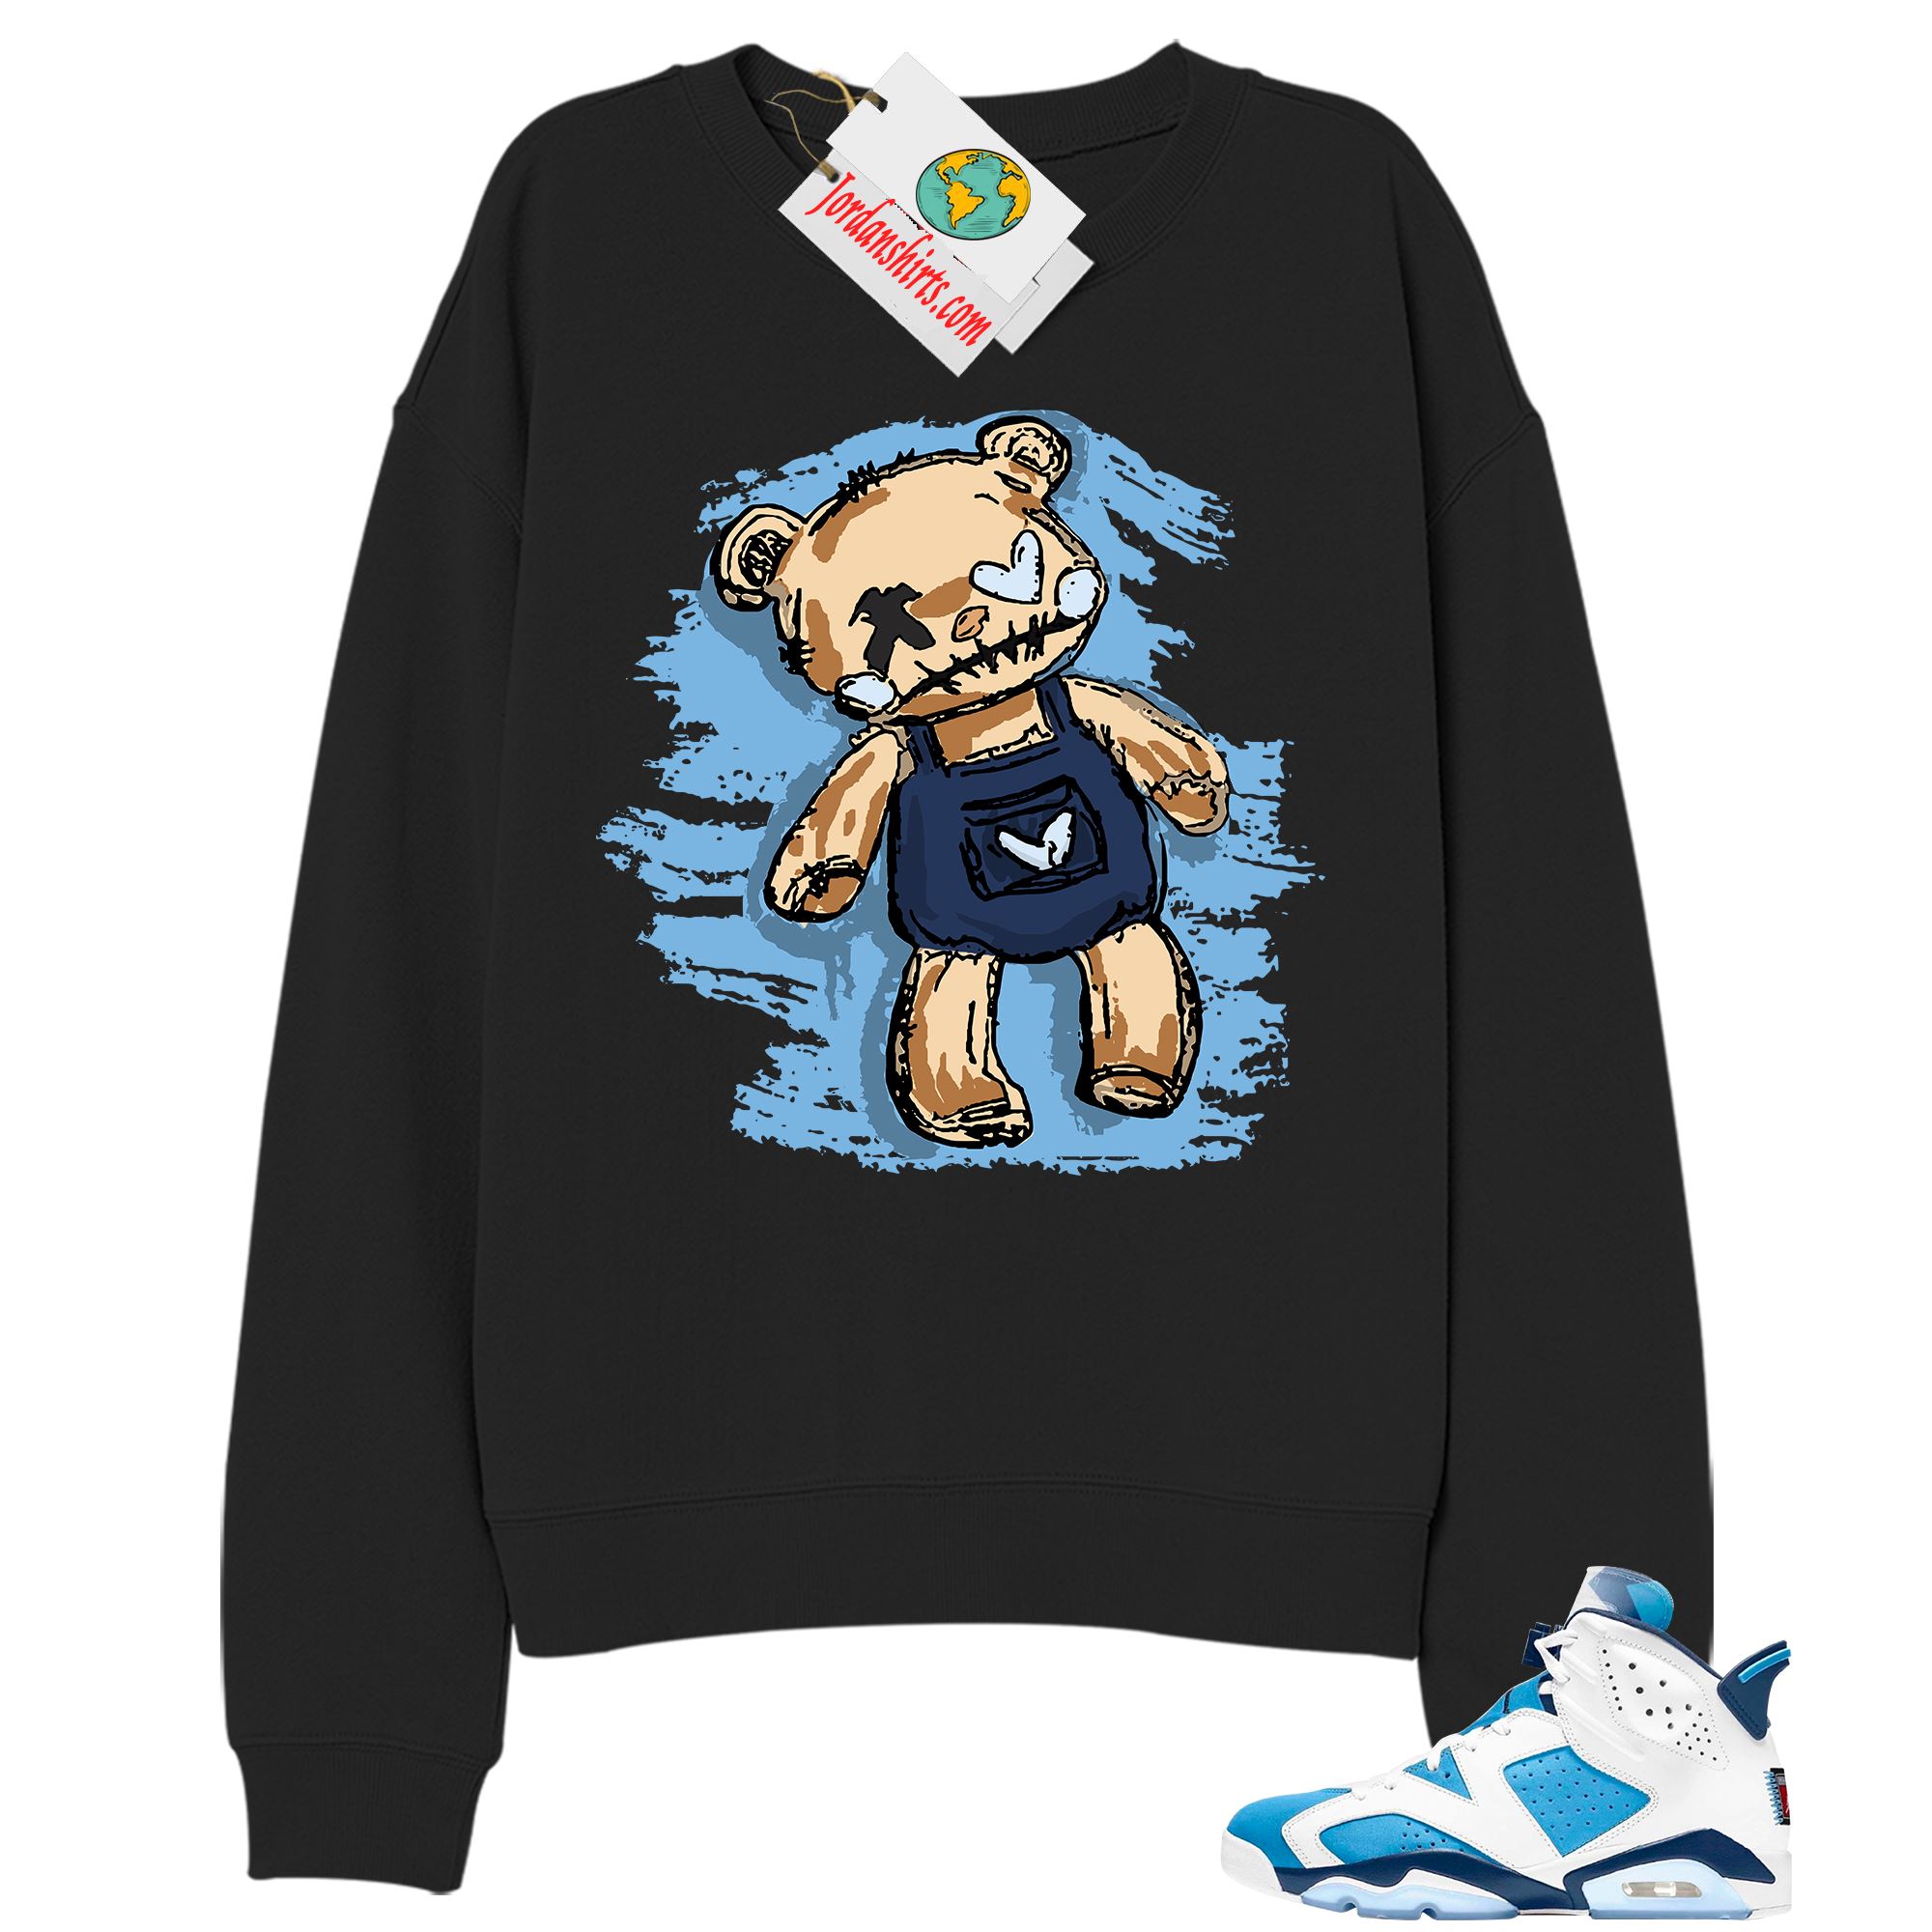 Jordan 6 Sweatshirt, Teddy Bear Broken Heart Black Sweatshirt Air Jordan 6 Unc 6s Size Up To 5xl